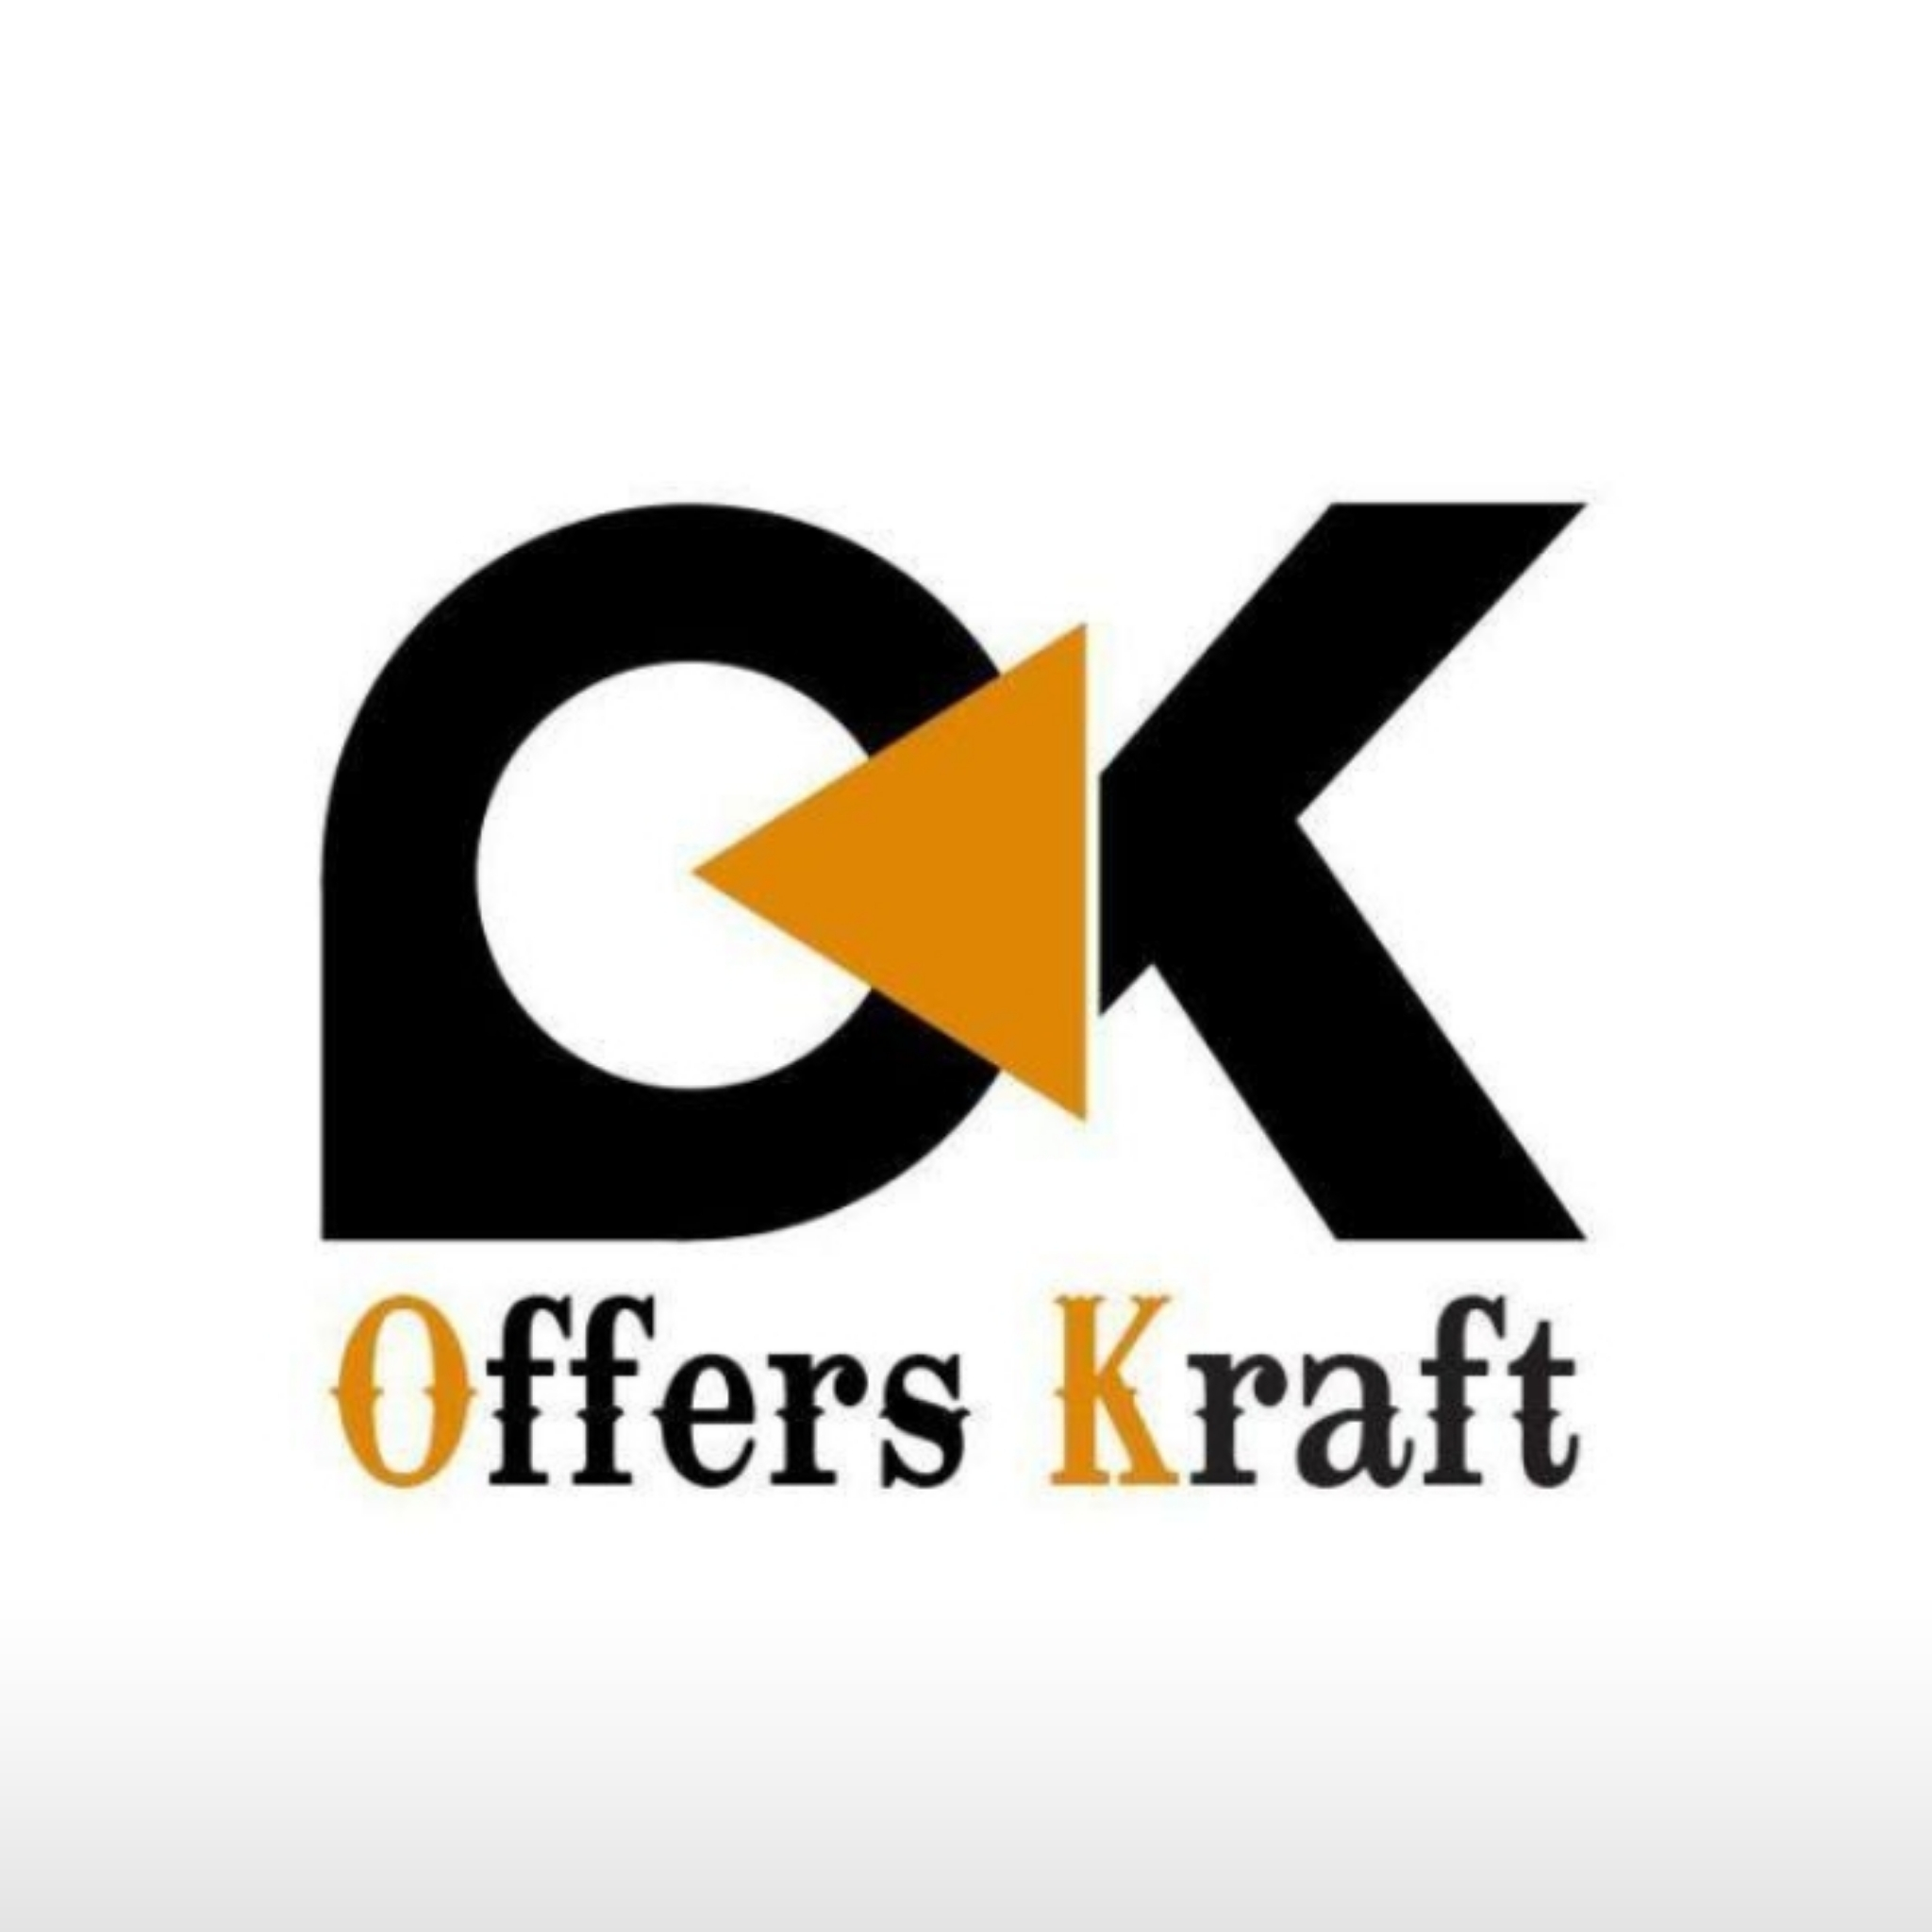 Offers Kraft